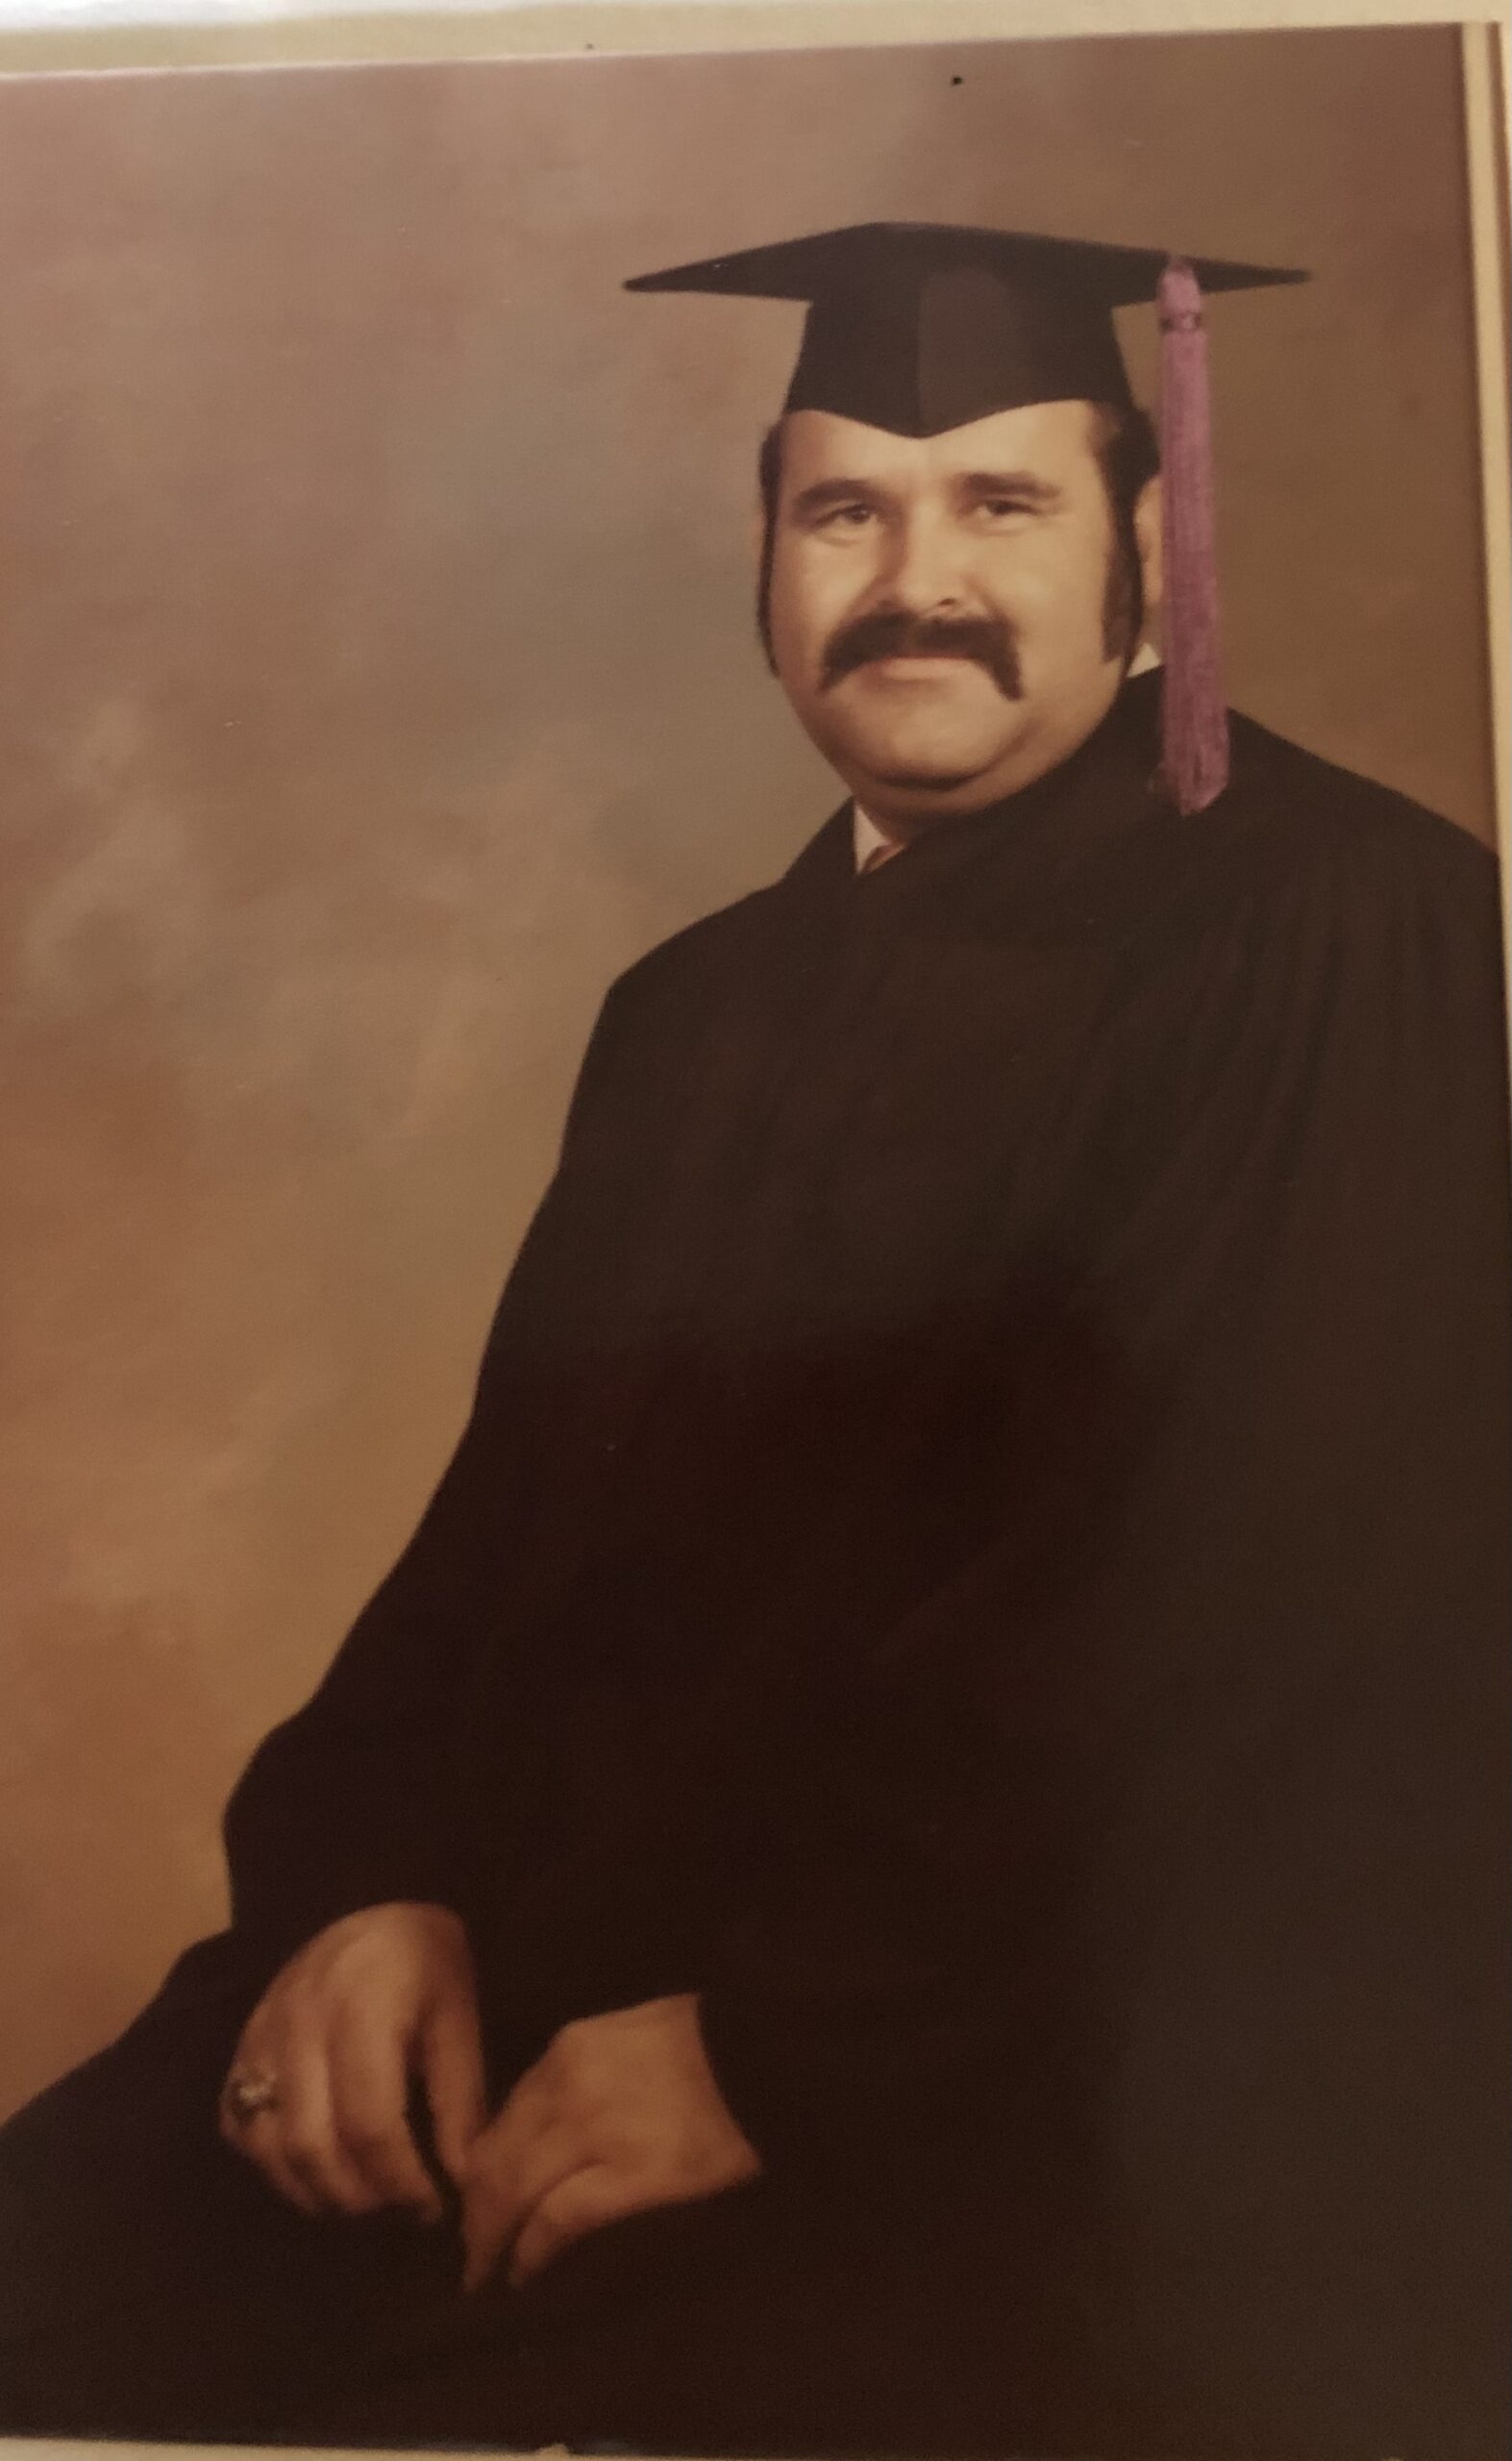 Merredieth “Mike” Astor Brown, BSN, RN, Class of 1972